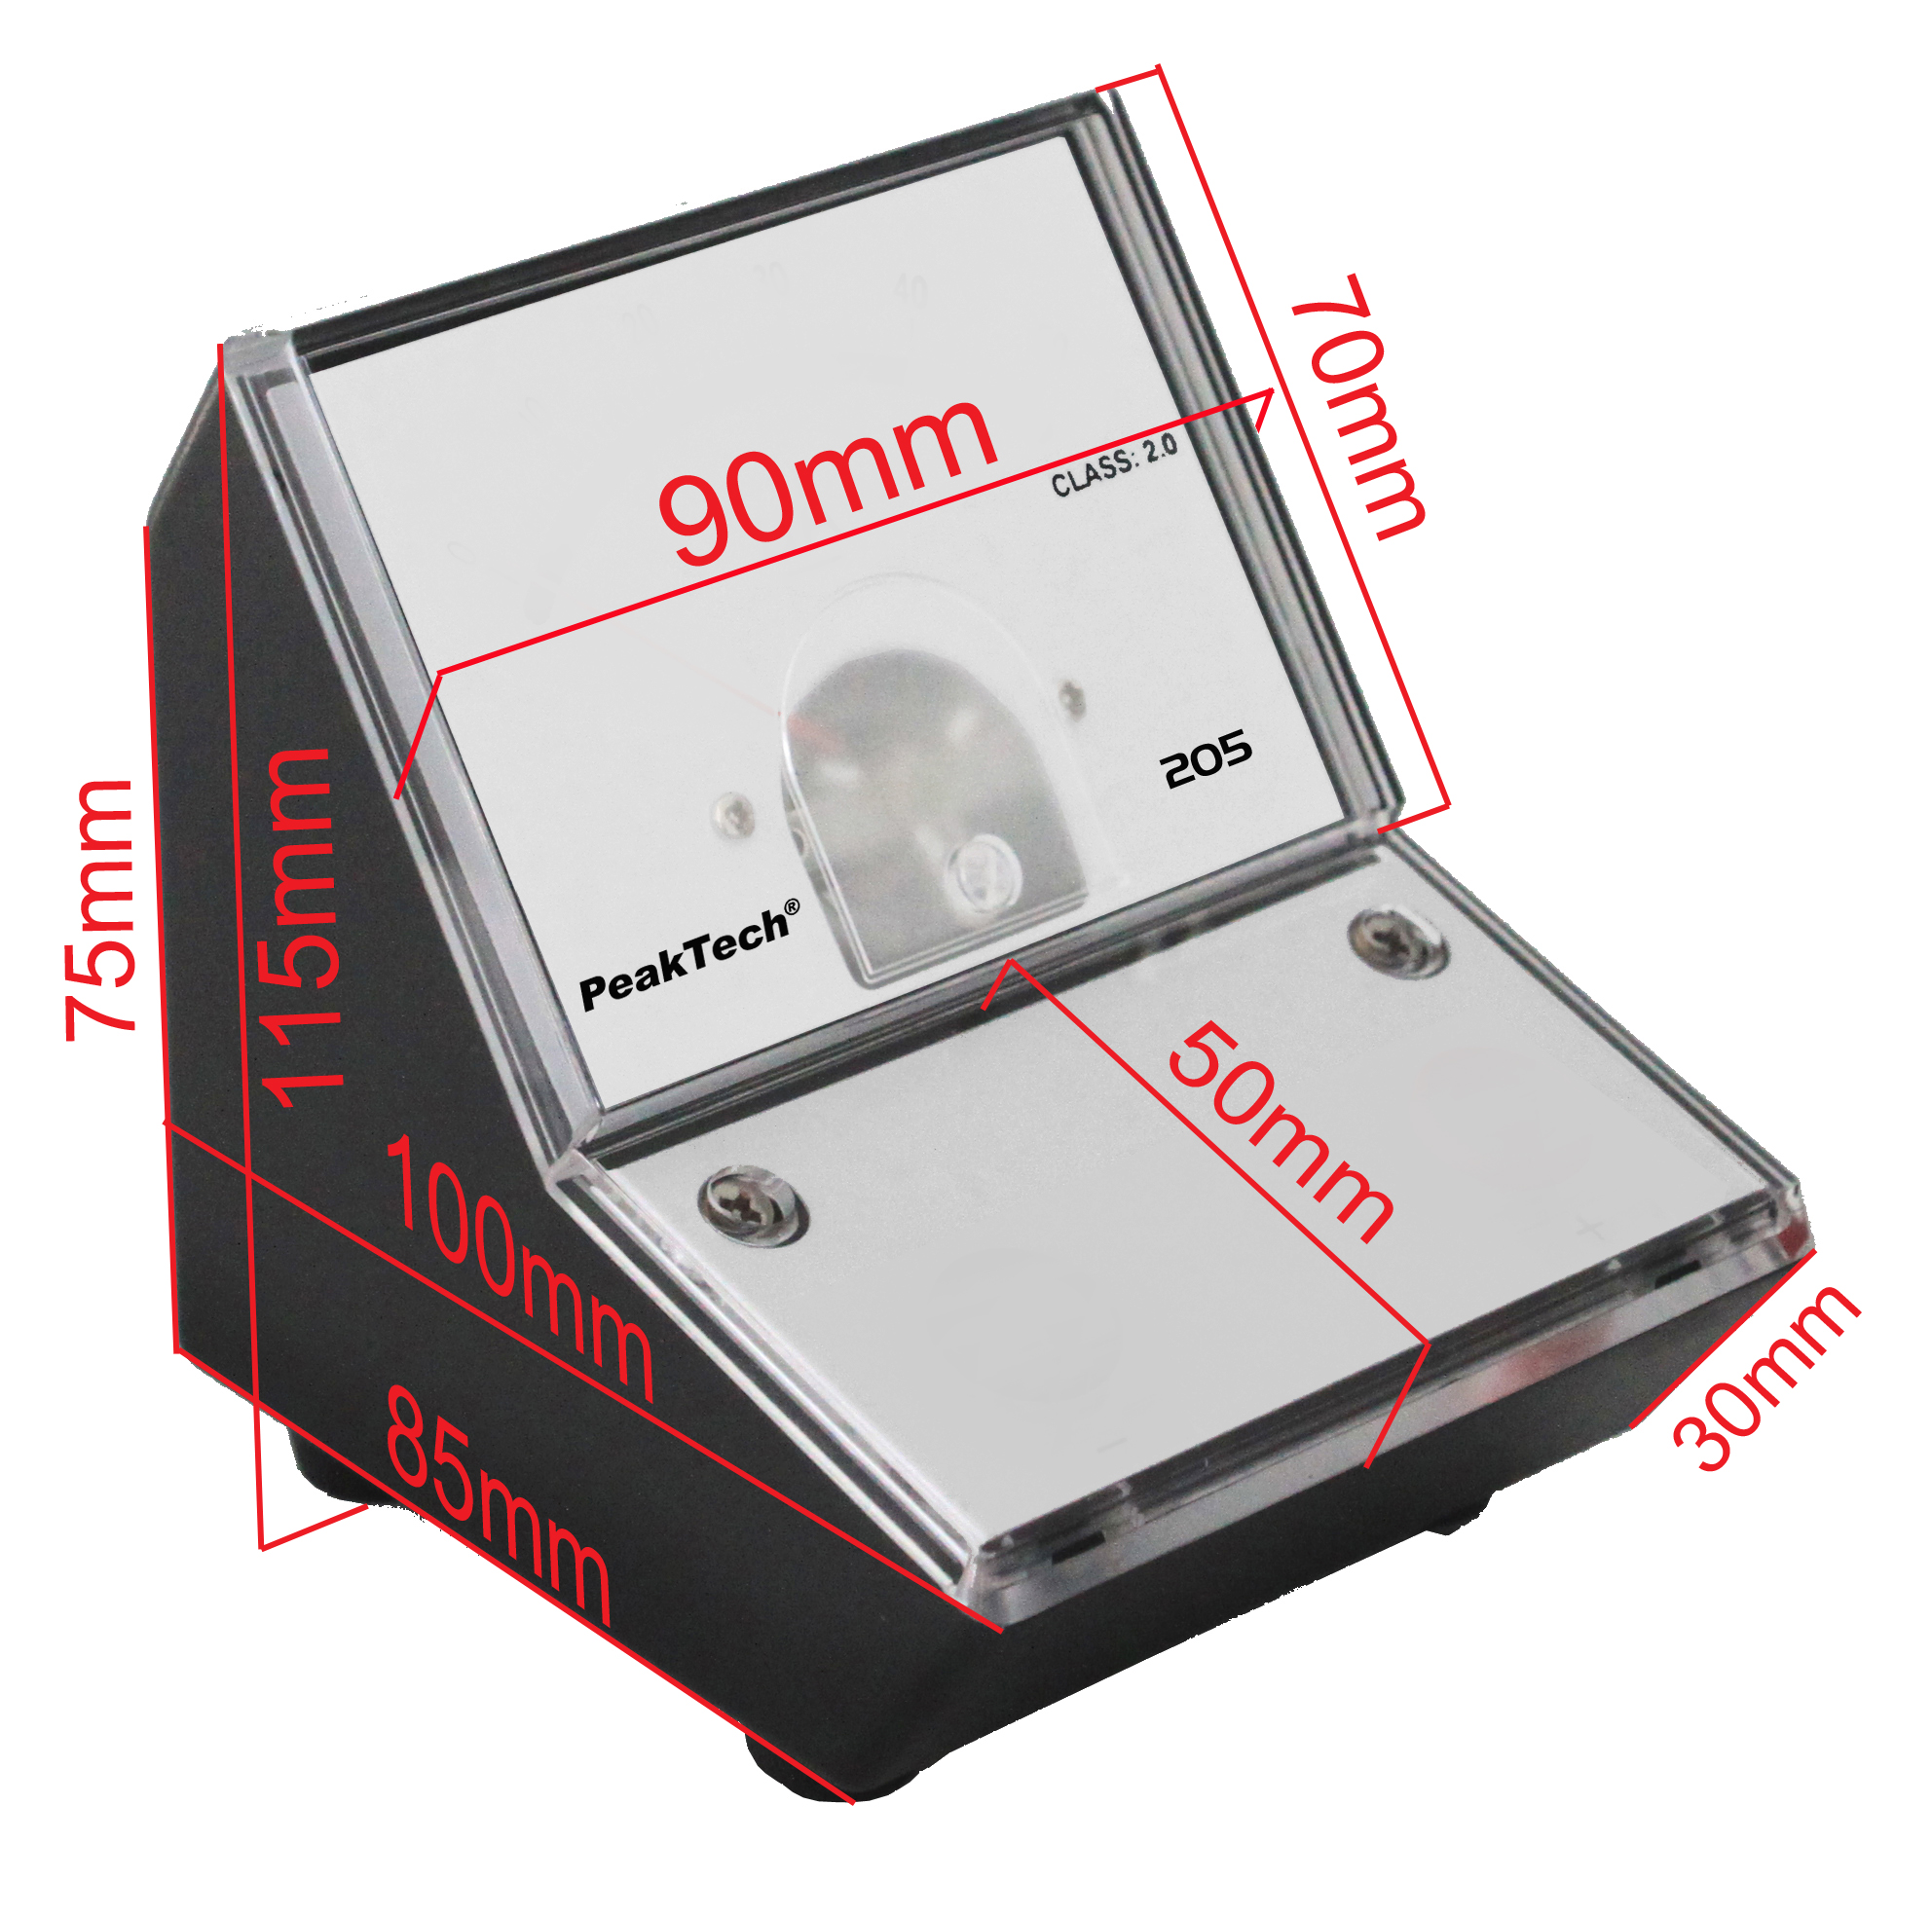 «PeakTech® P 205-03» Analog amperemeter - 0 ... 1mA DC